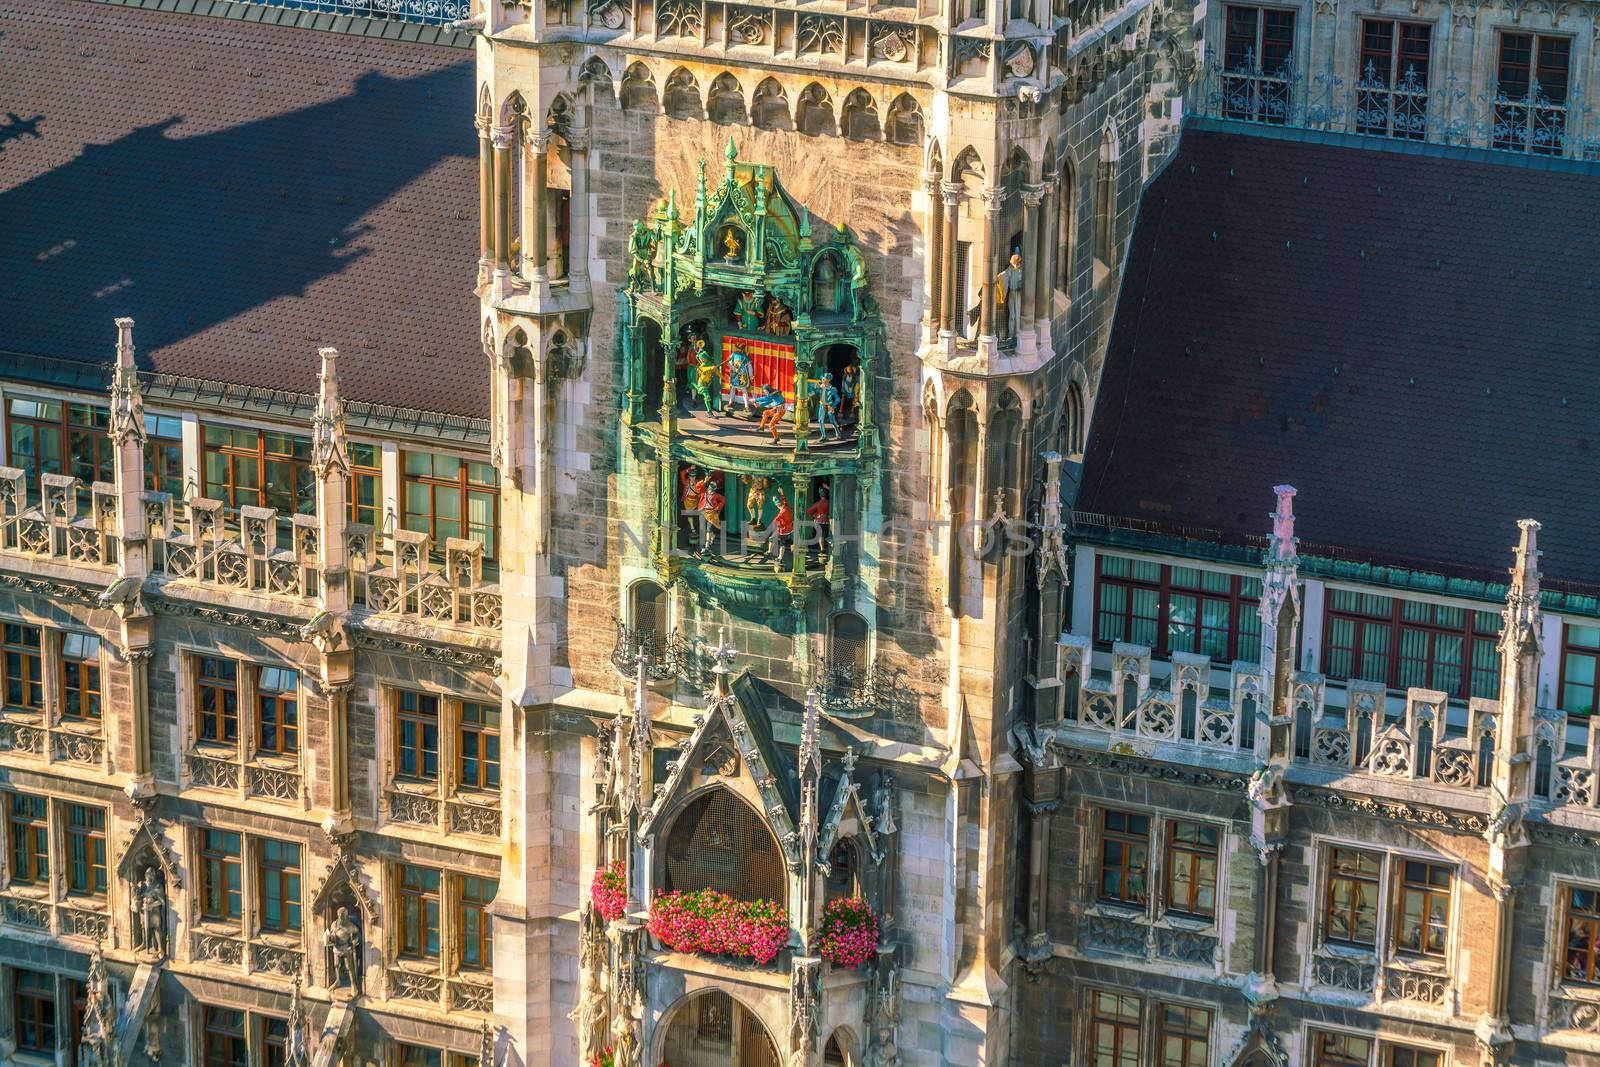 Marienplatz City Hall Tower Clock  by f11photo